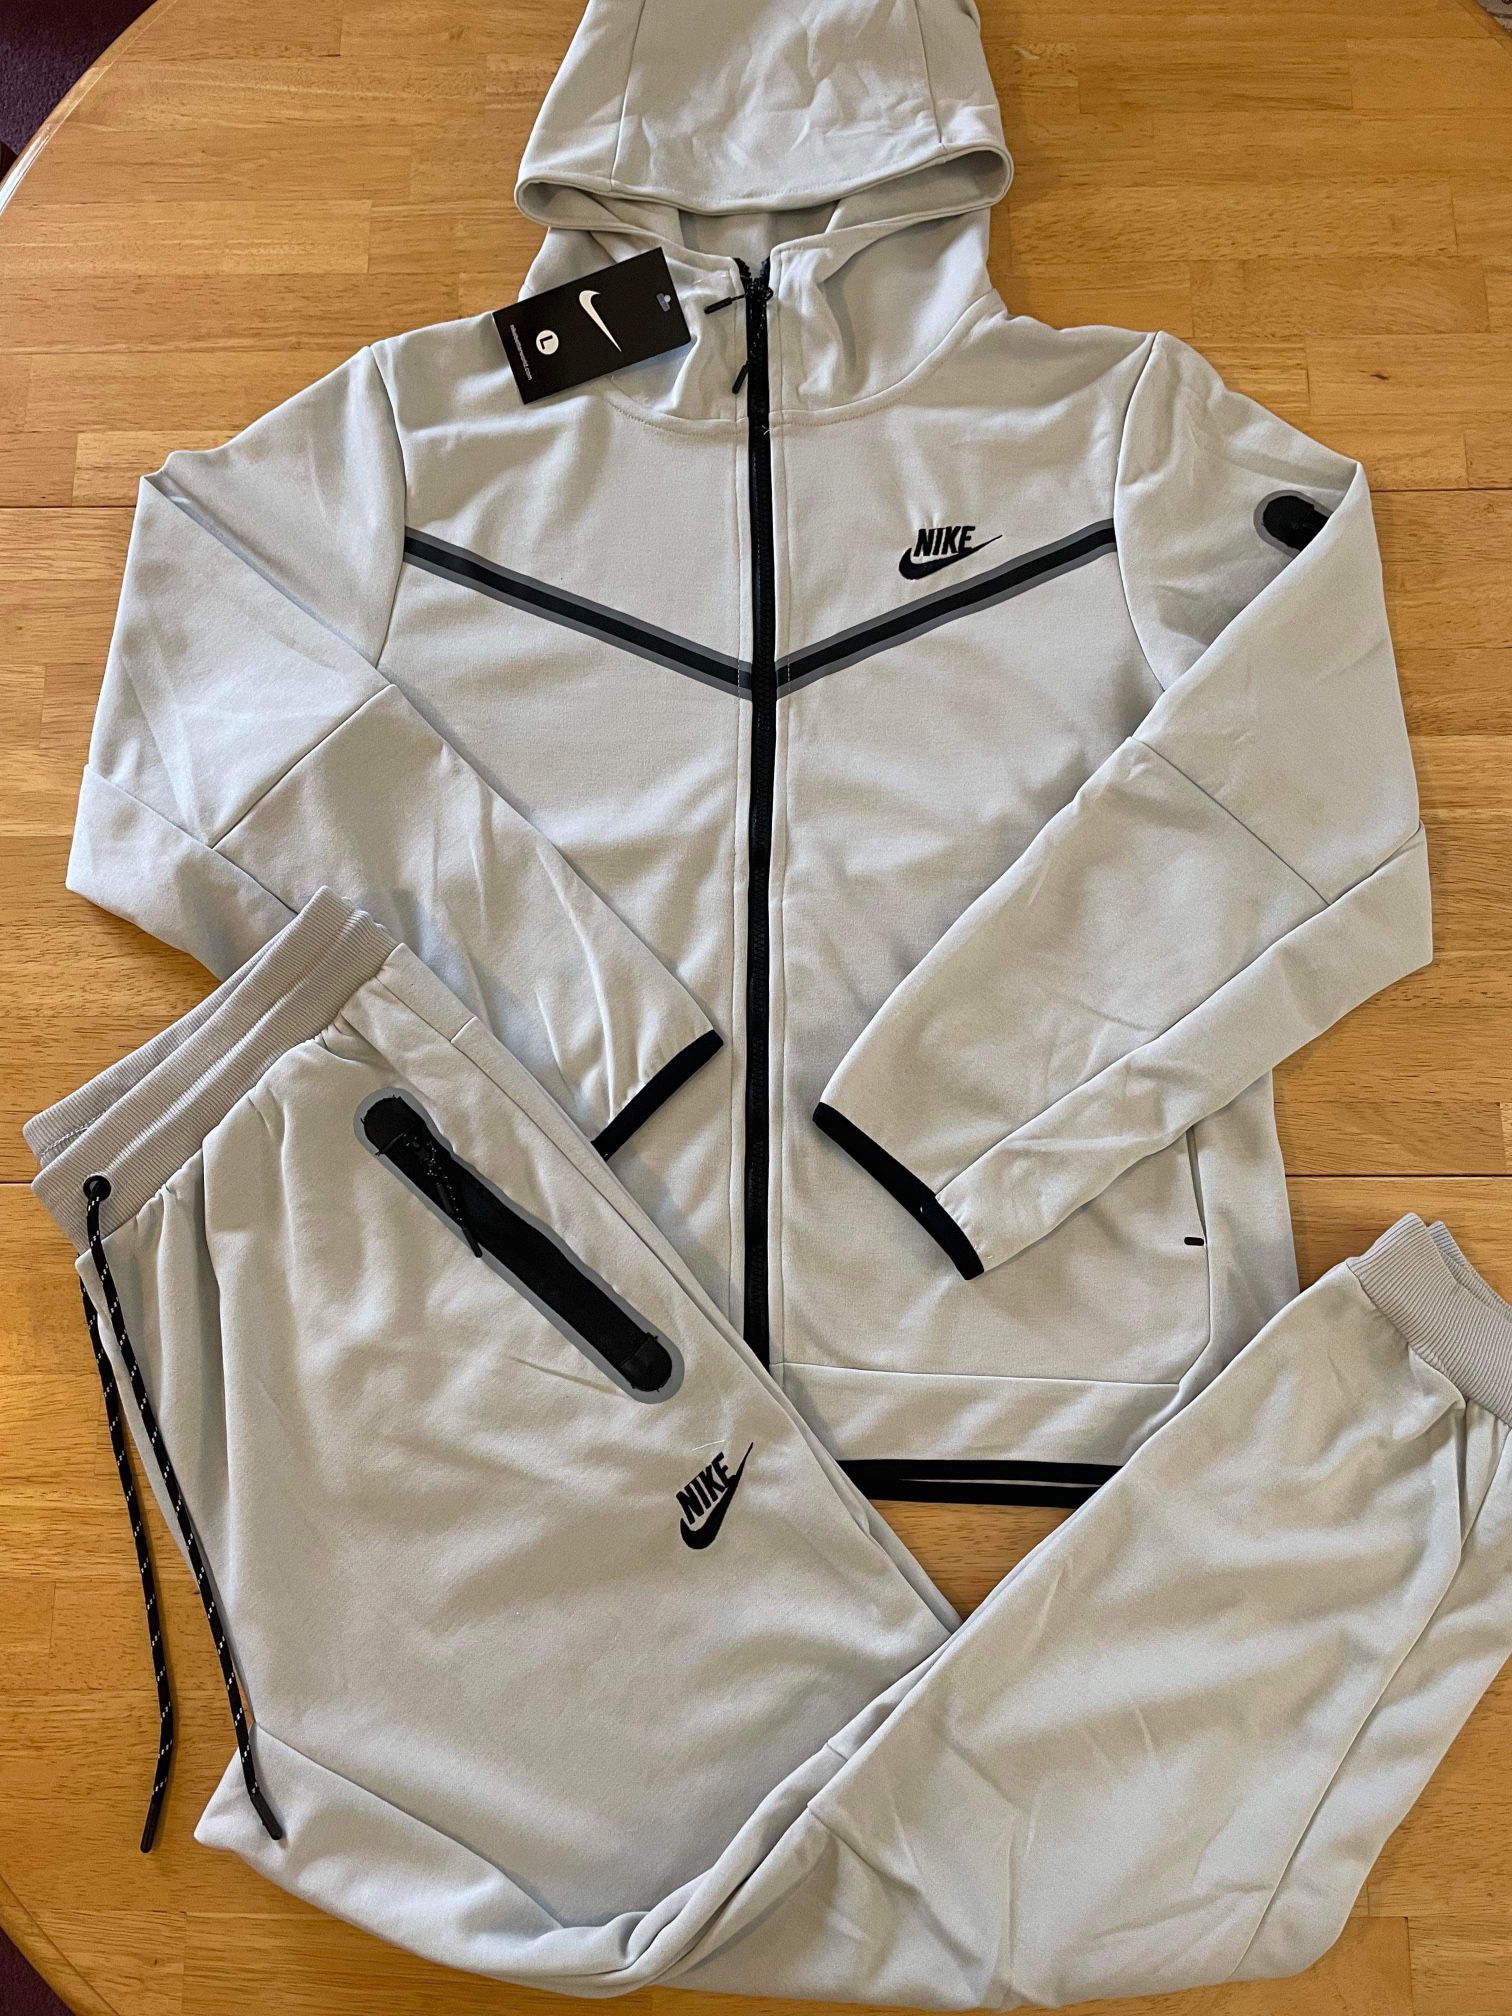 Mens Nike sweatsuits sizes m and L $70 each hmu 🔥💯✅